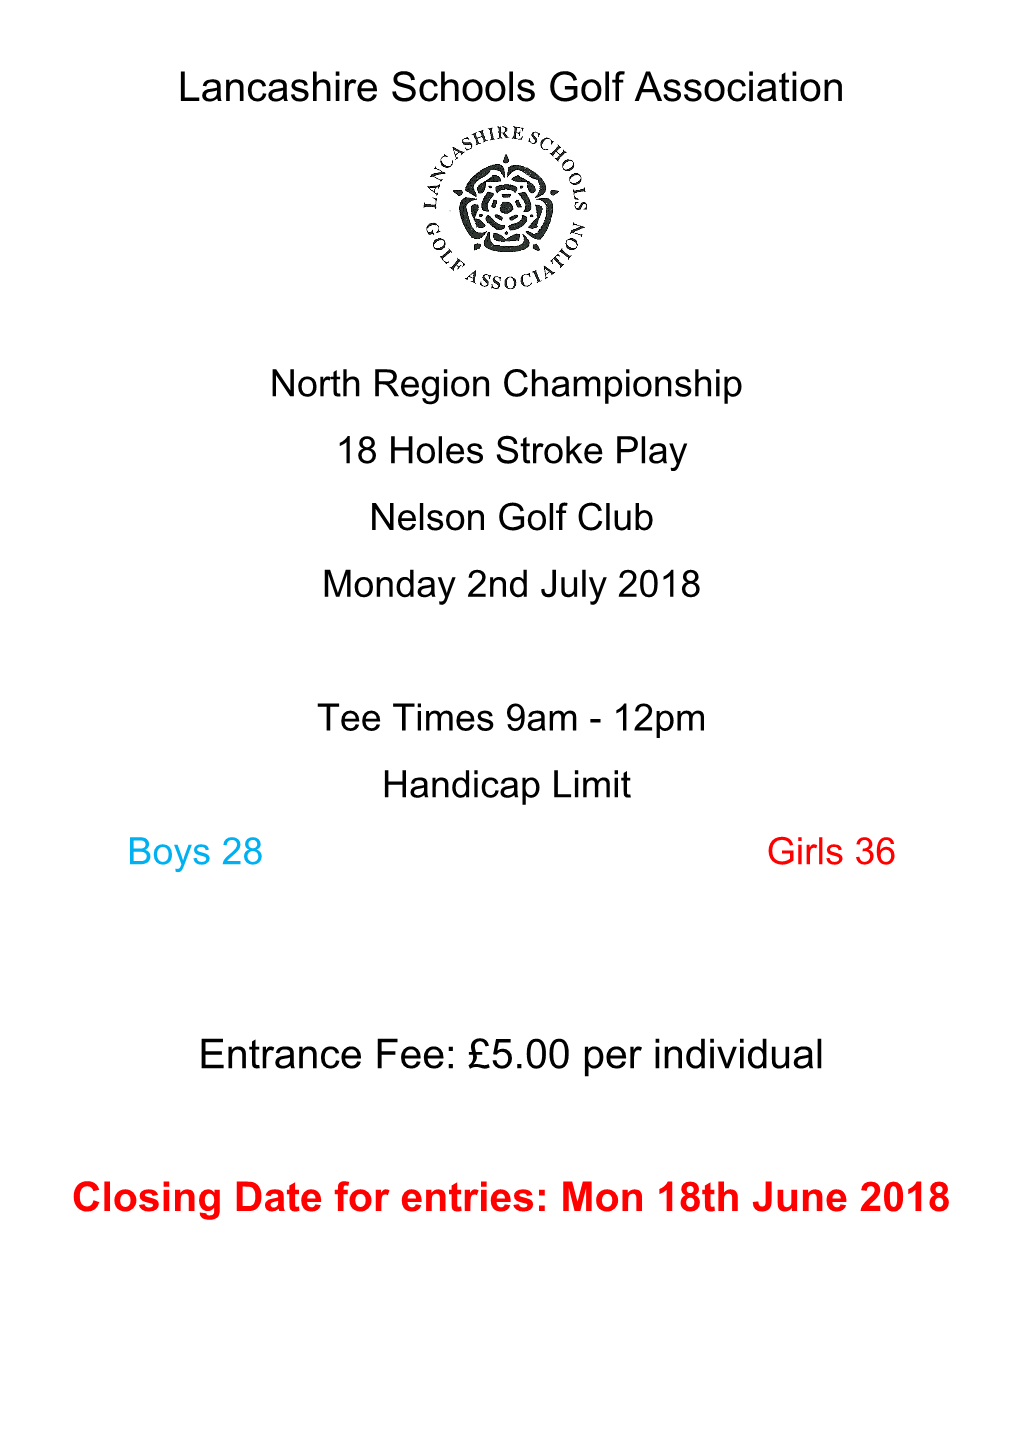 North Region Championship